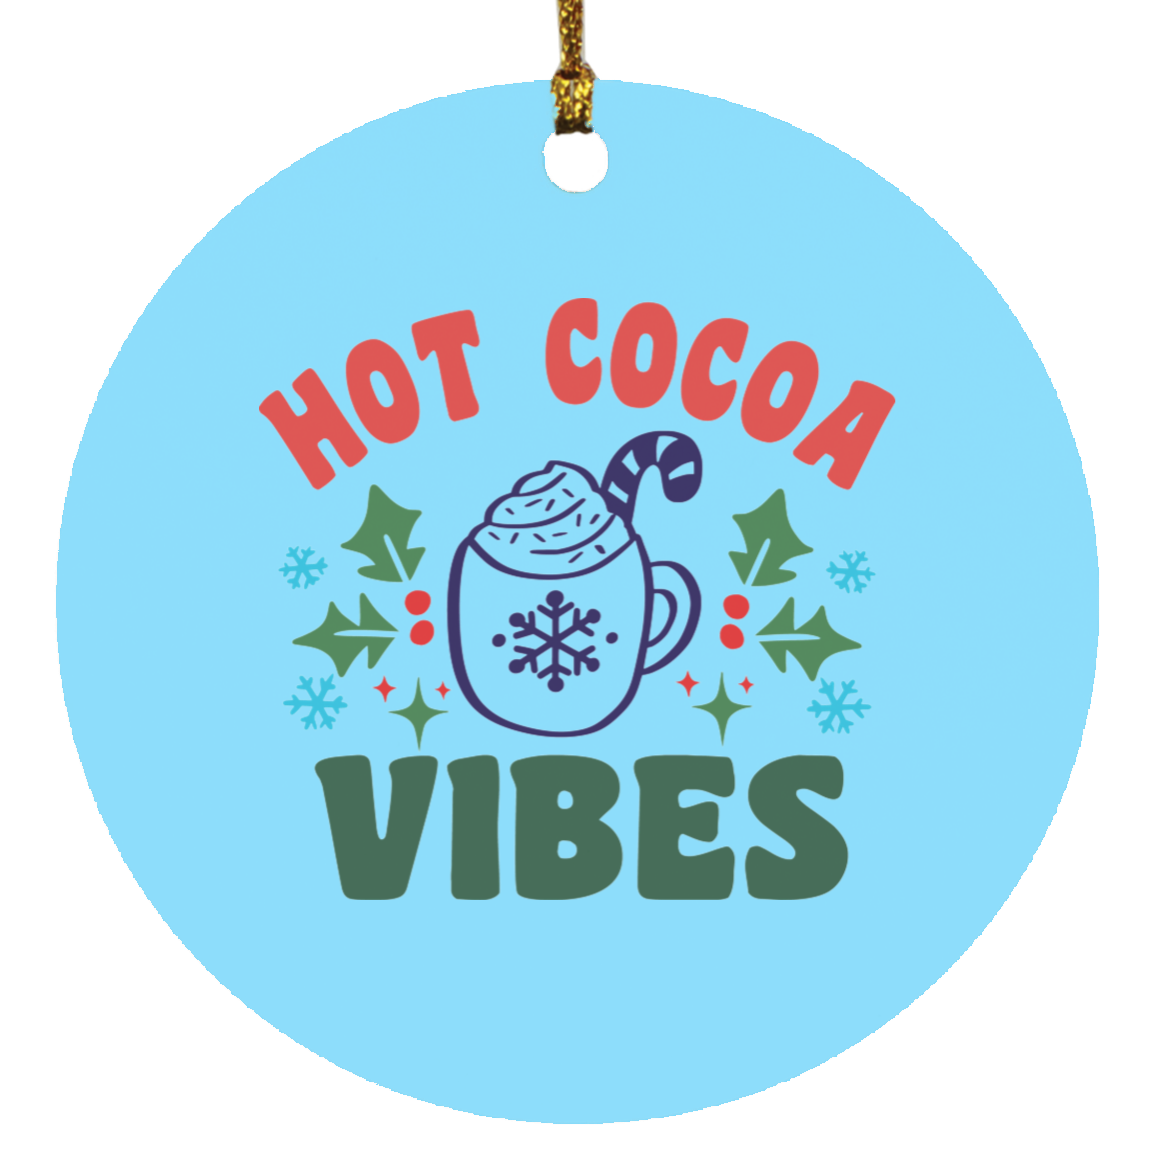 Hot Cocoa Circle Ornament